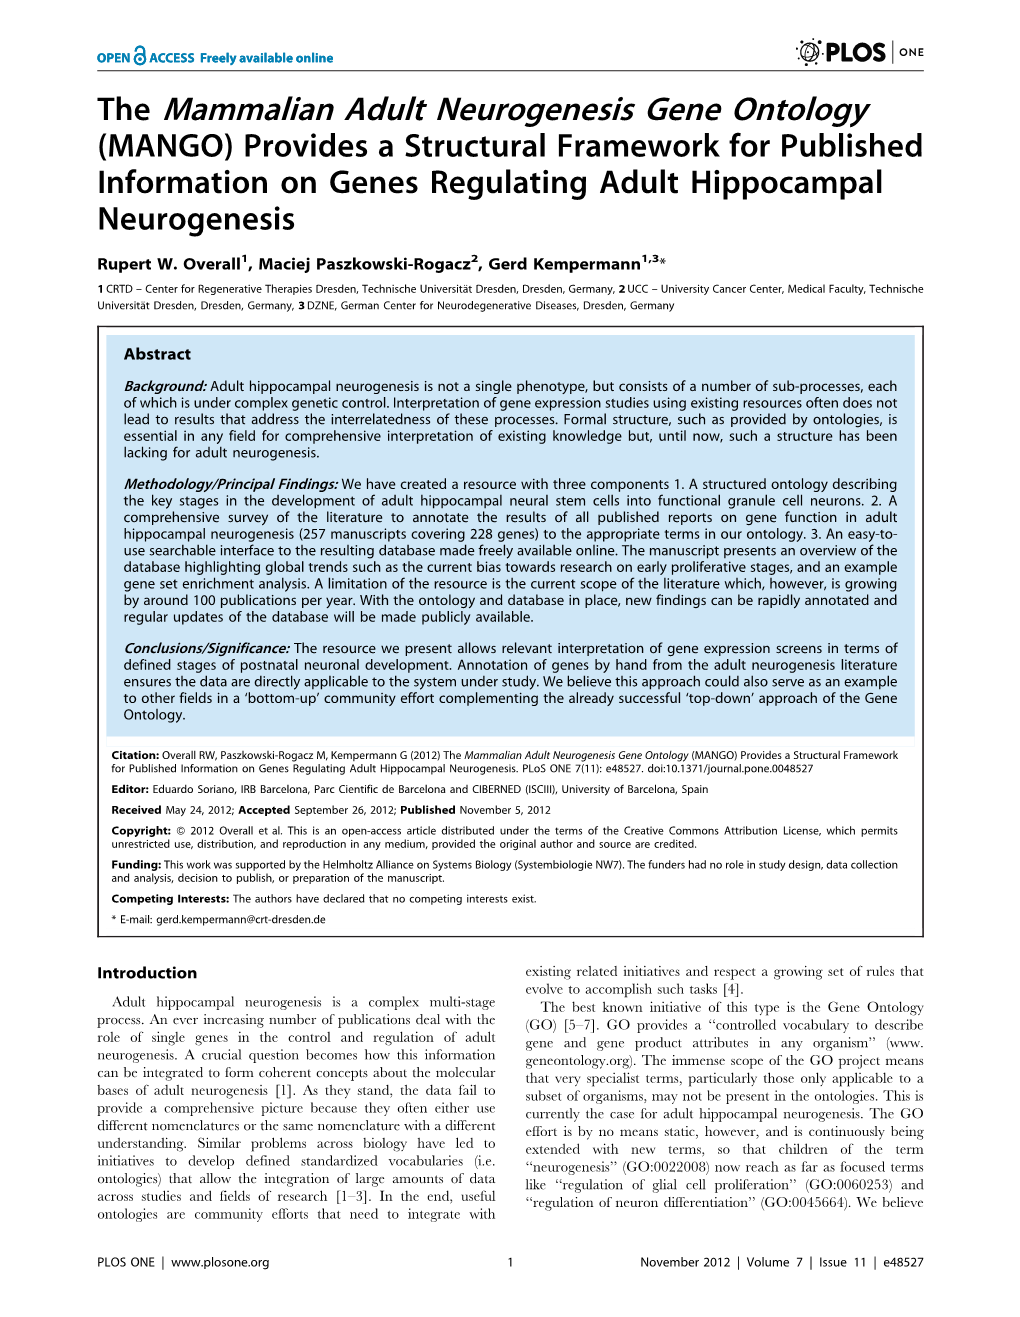 The Mammalian Adult Neurogenesis Gene Ontology (MANGO) Provides a Structural Framework for Published Information on Genes Regulating Adult Hippocampal Neurogenesis